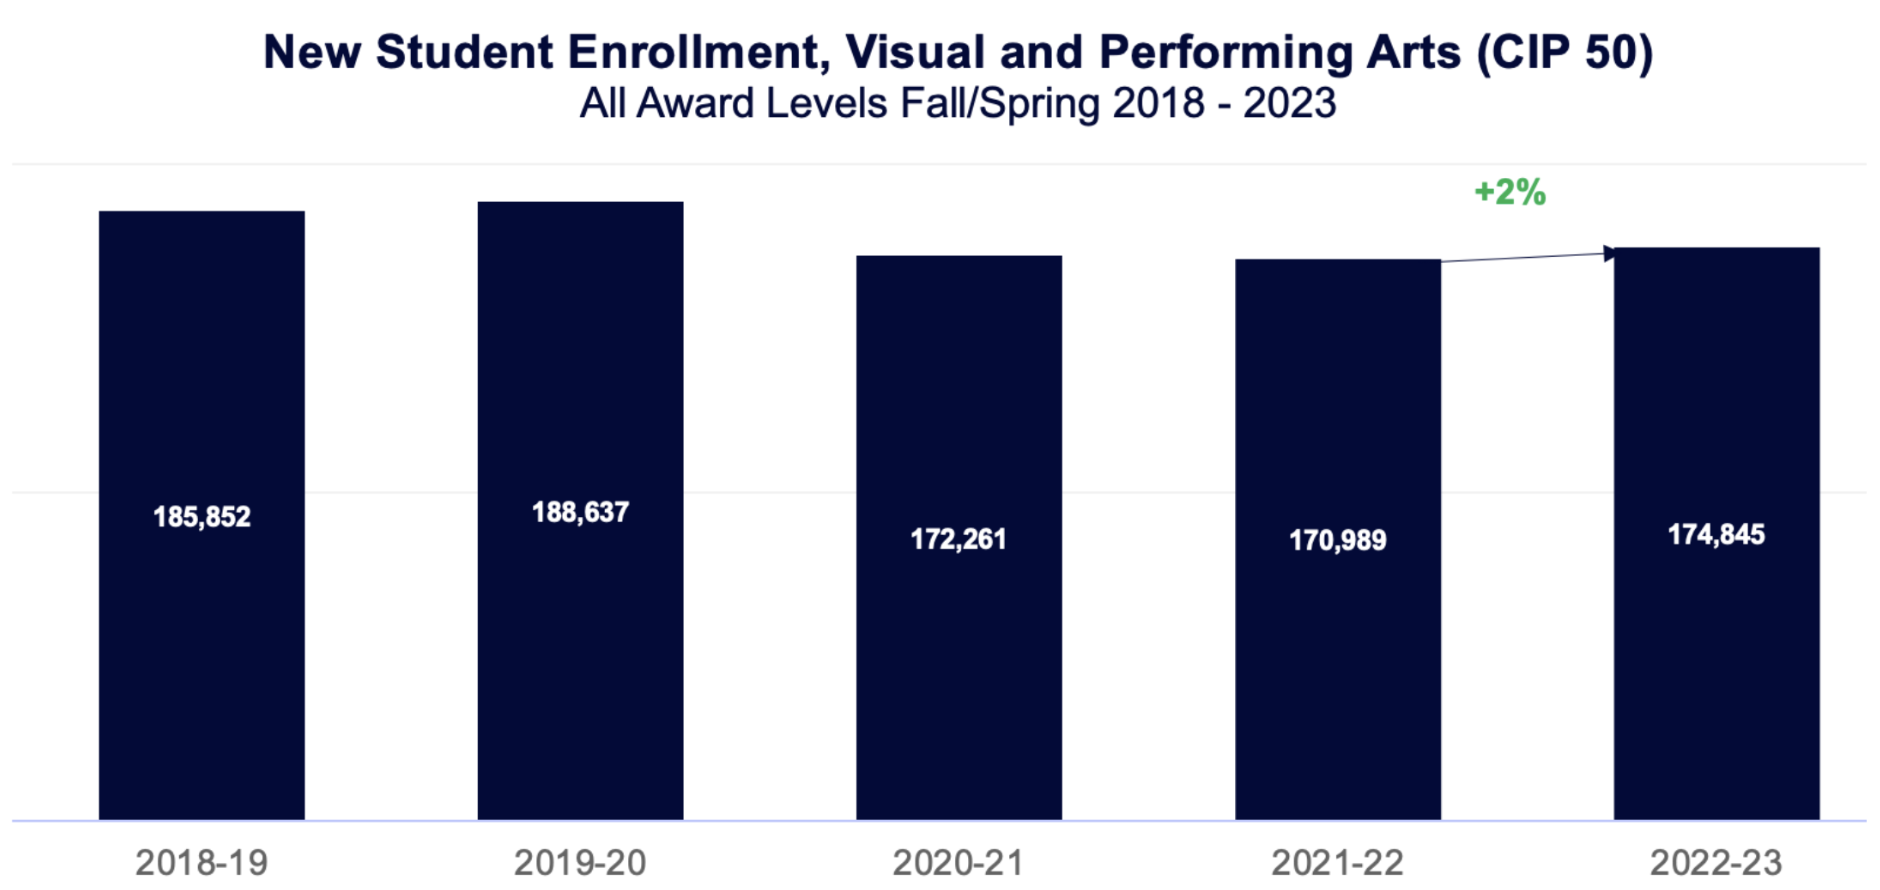 New Student Enrollment, Visual and Performing Arts (CIP50) - All award levels Fall/Spring 2018-2023